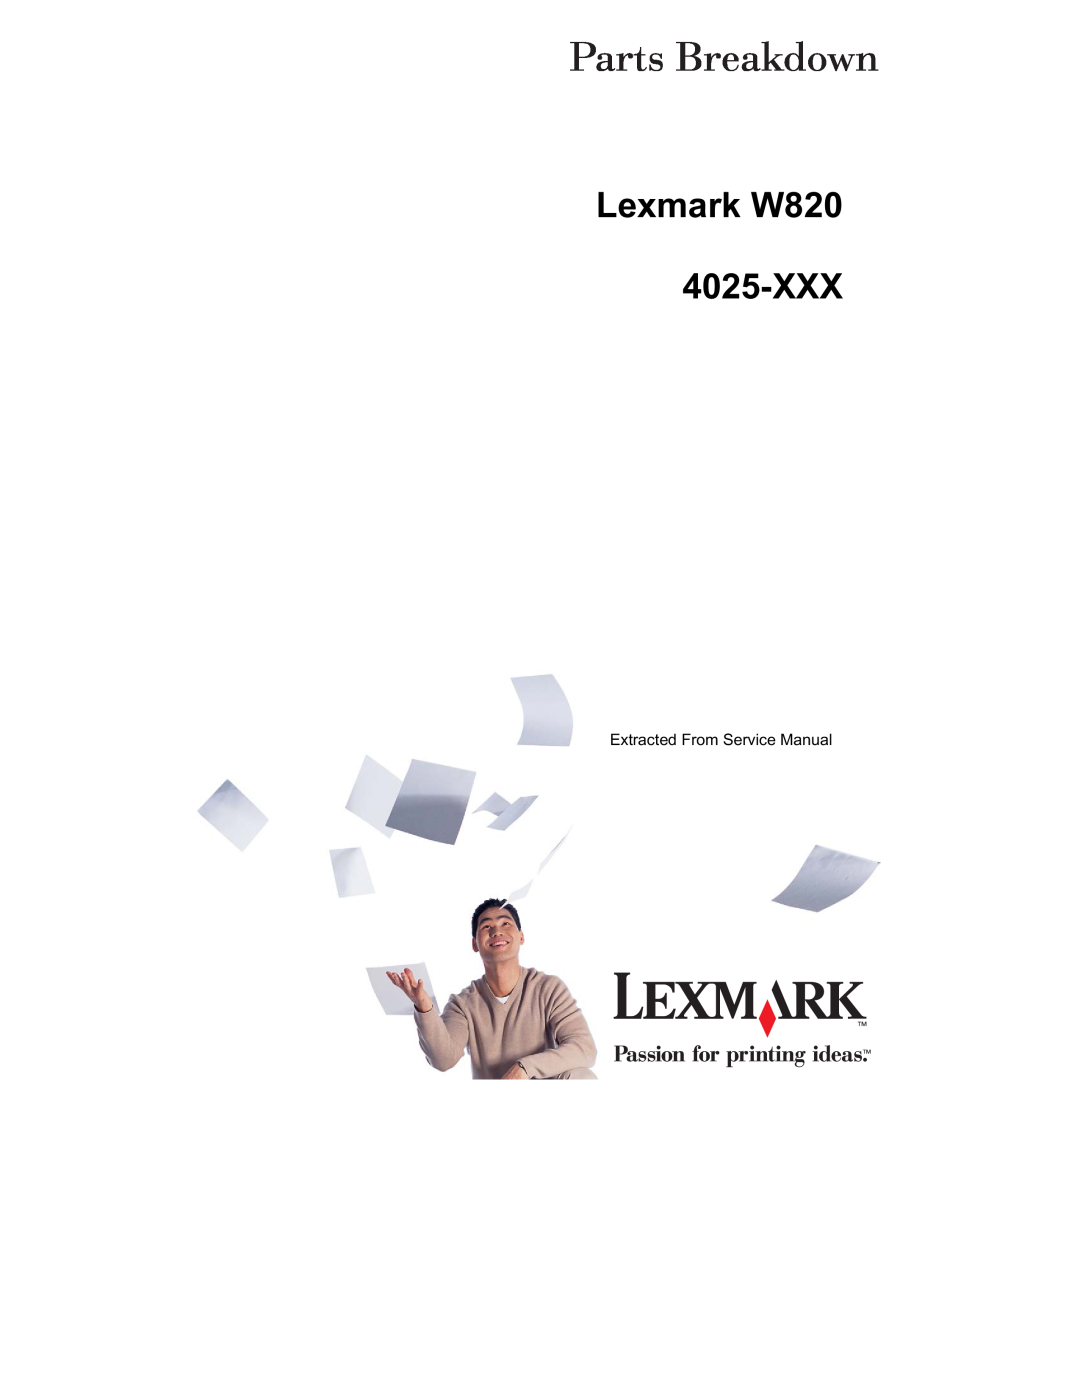 Lexmark W820 manual Solving print quality problems, Printing Paper handling Maintenance, Troubleshooting 